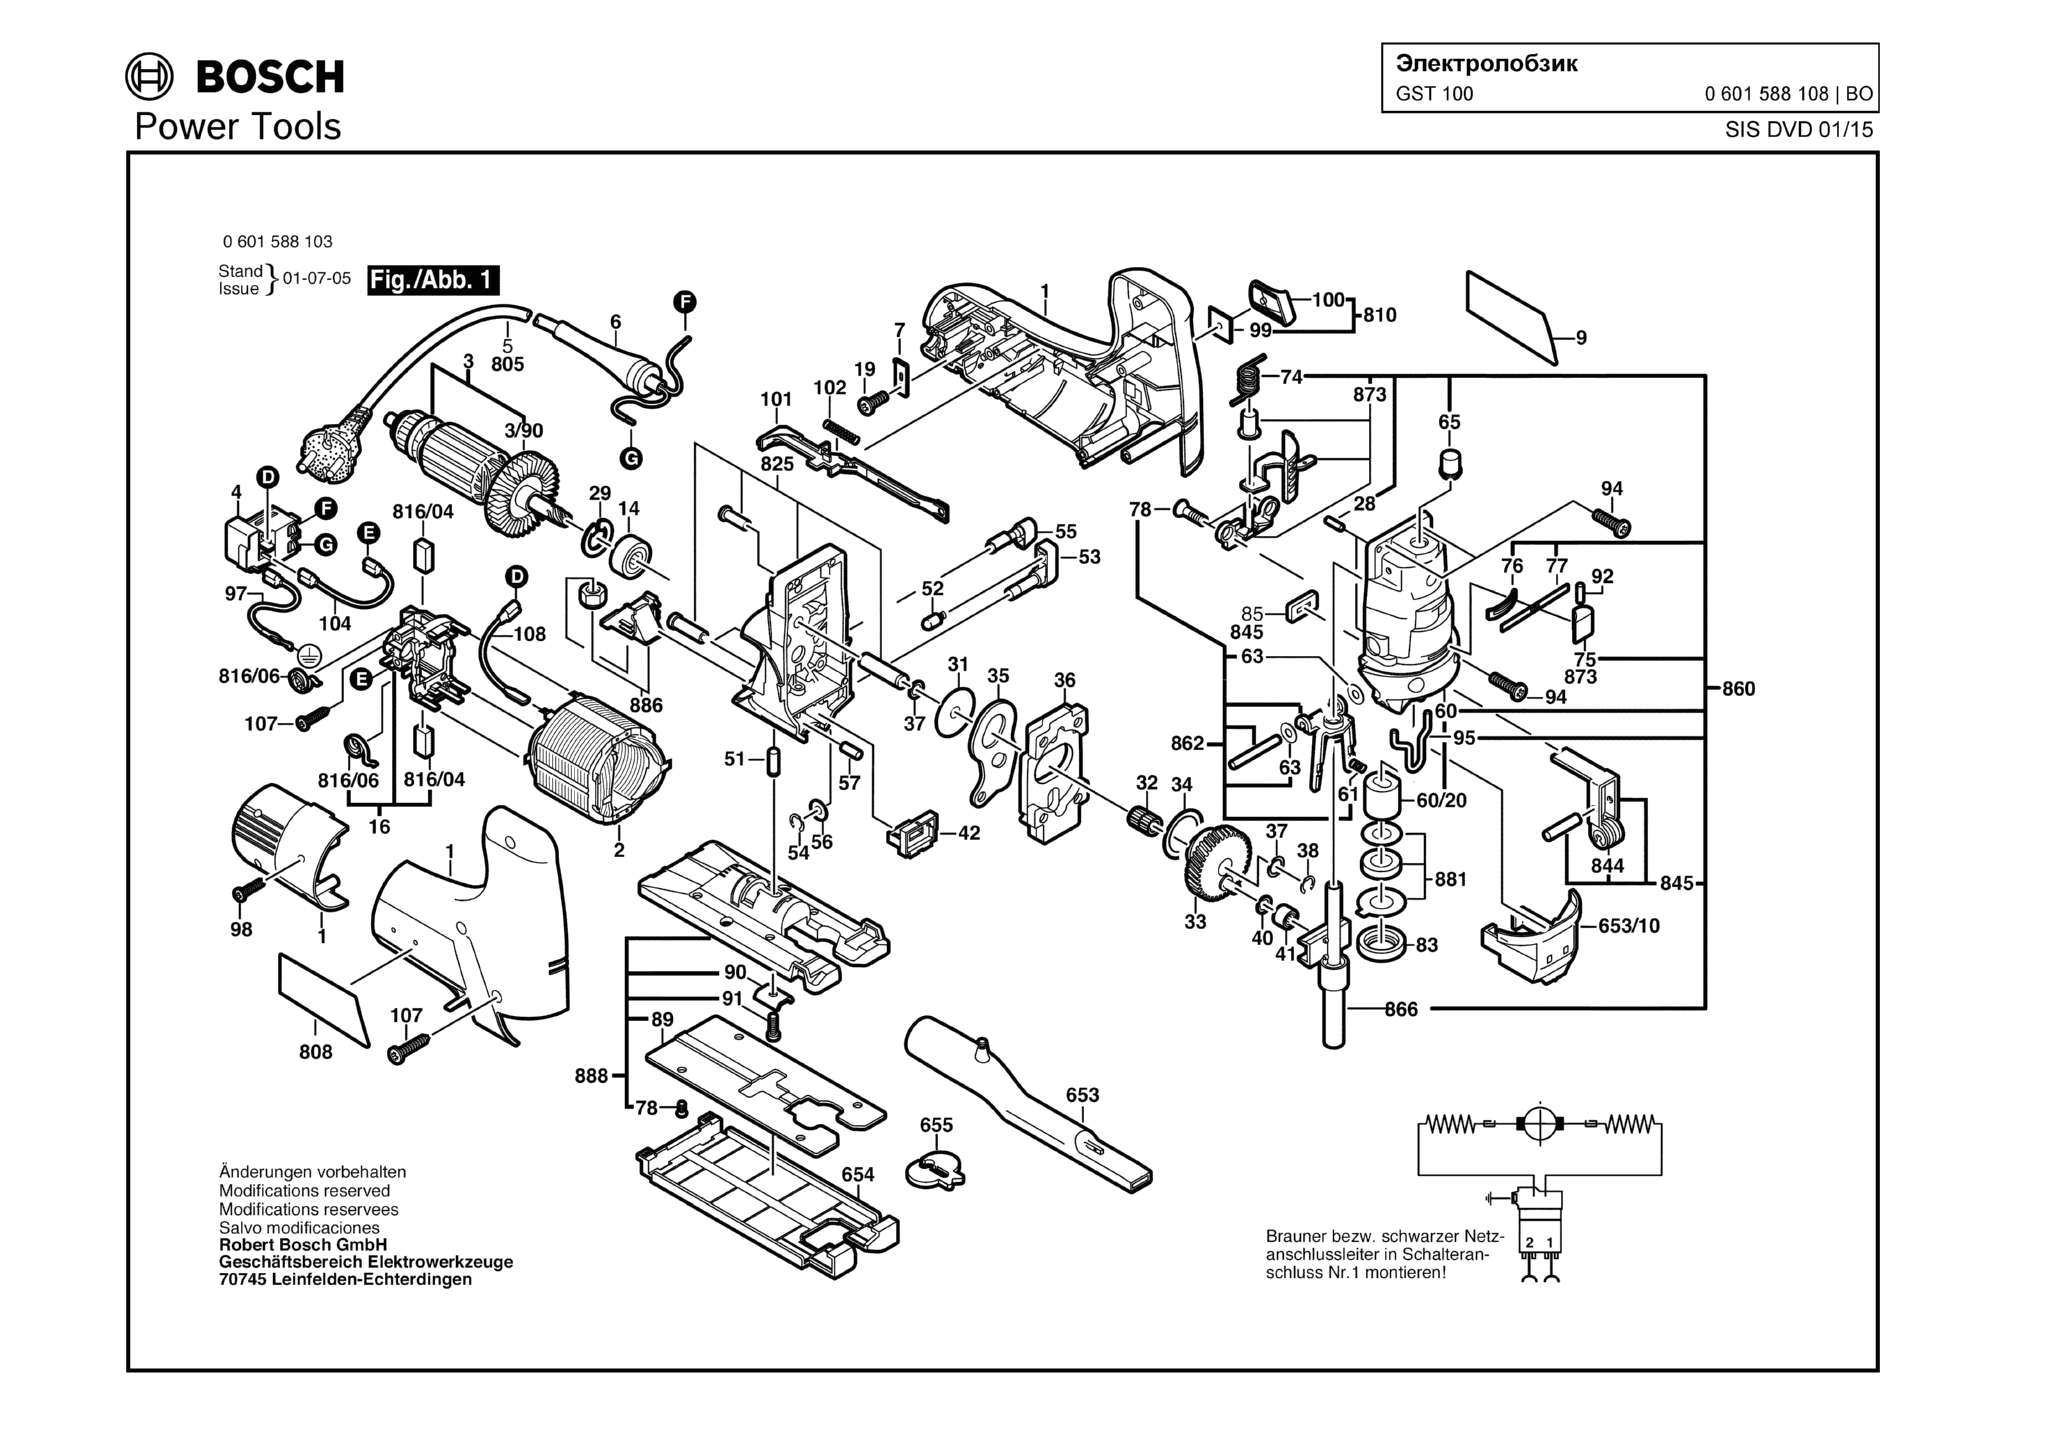 Запчасти, схема и деталировка Bosch GST 100 (ТИП 0601588108)